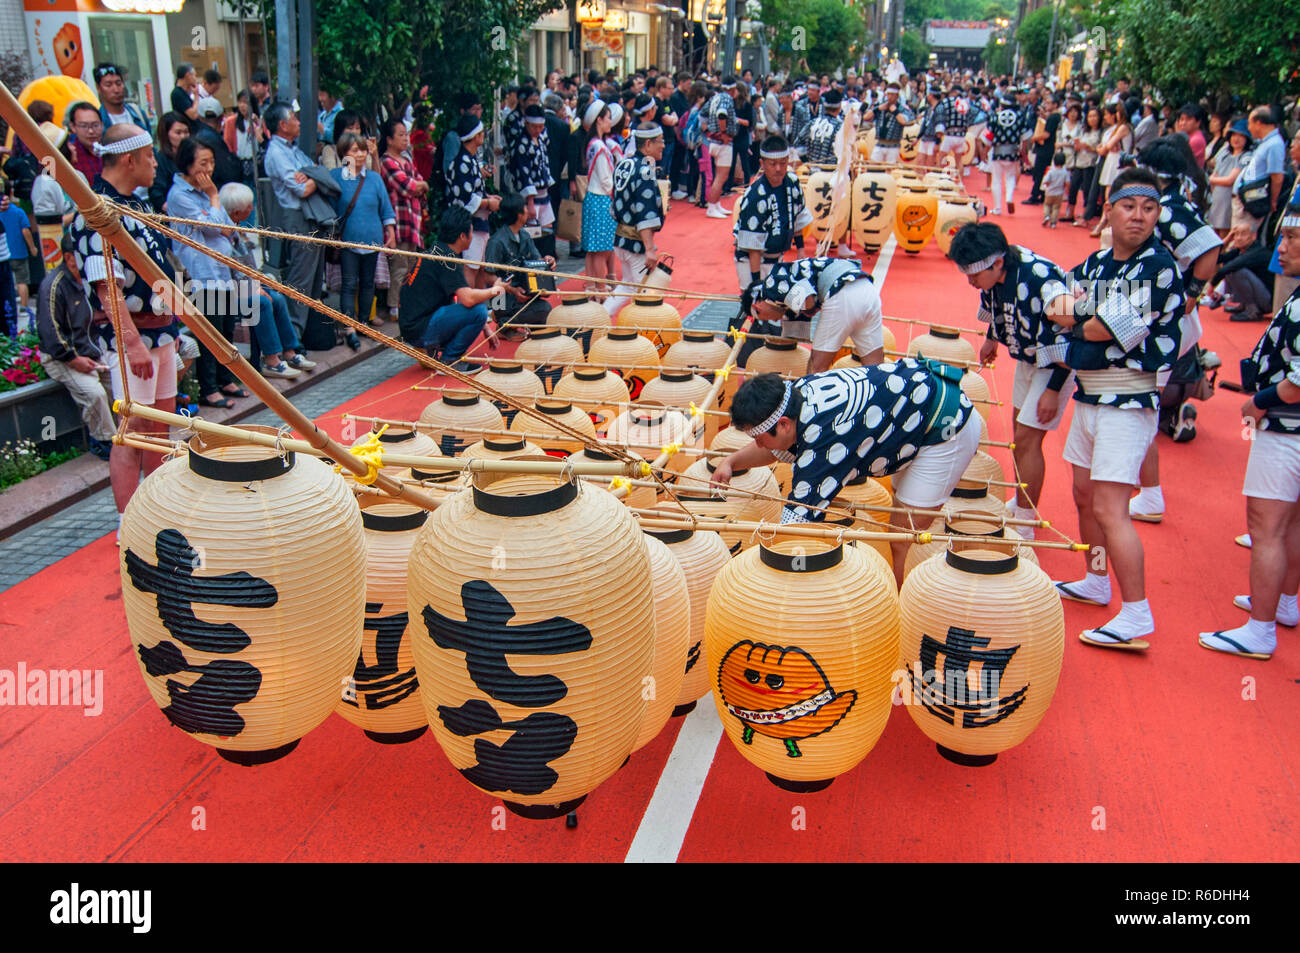 Lantern Poles Weighing Up To 60 Kilograms Are Balanced During The Kanto Matsuri Festival In Akita Tokyo Japan Stock Photo